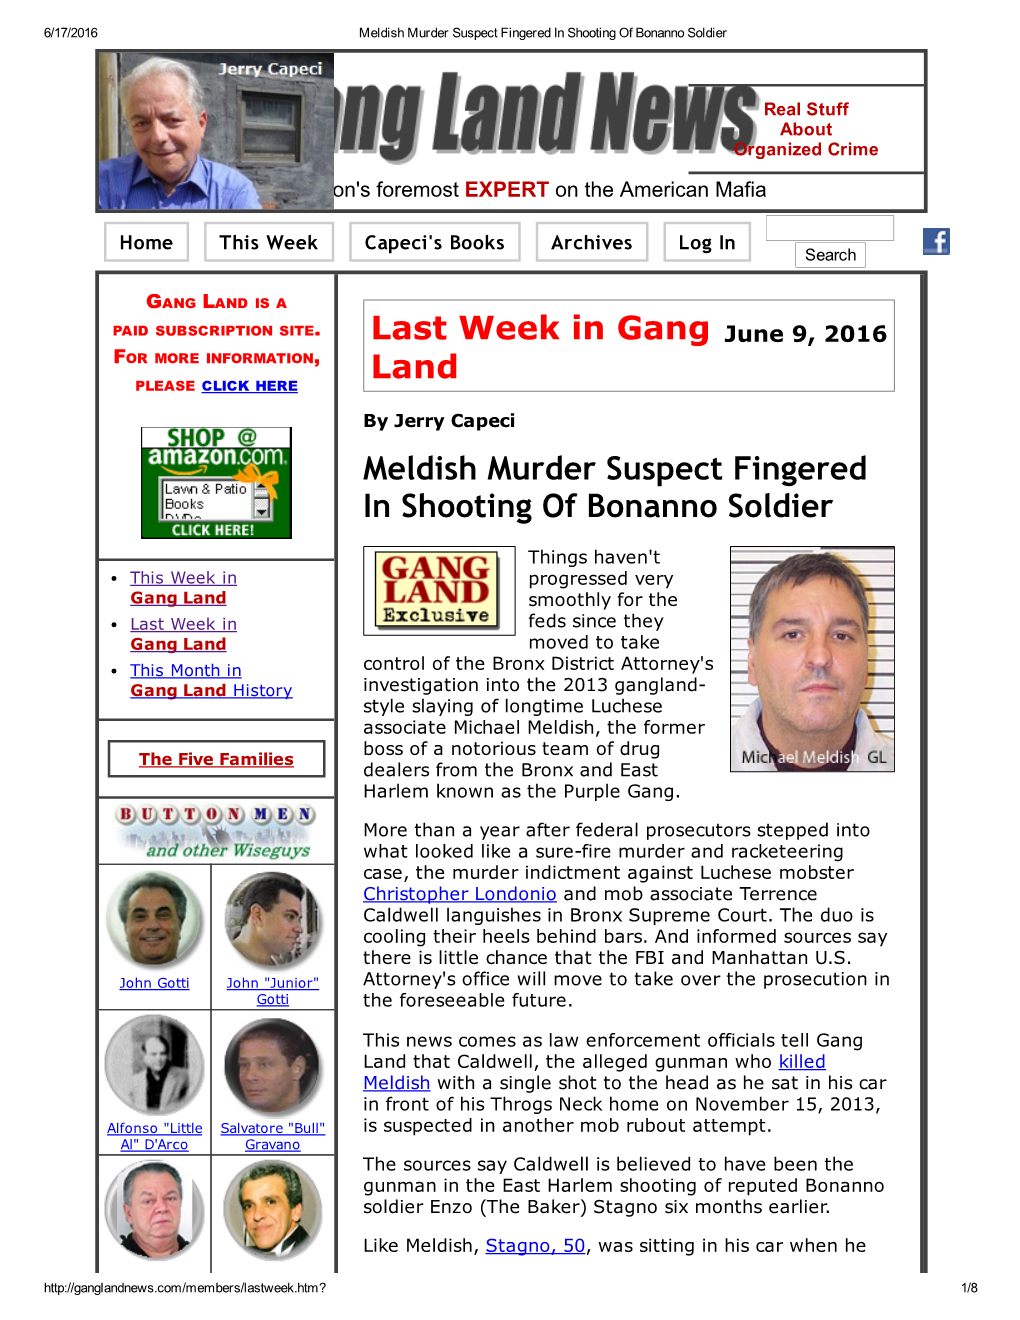 Last Week in Gang Land Meldish Murder Suspect Fingered In